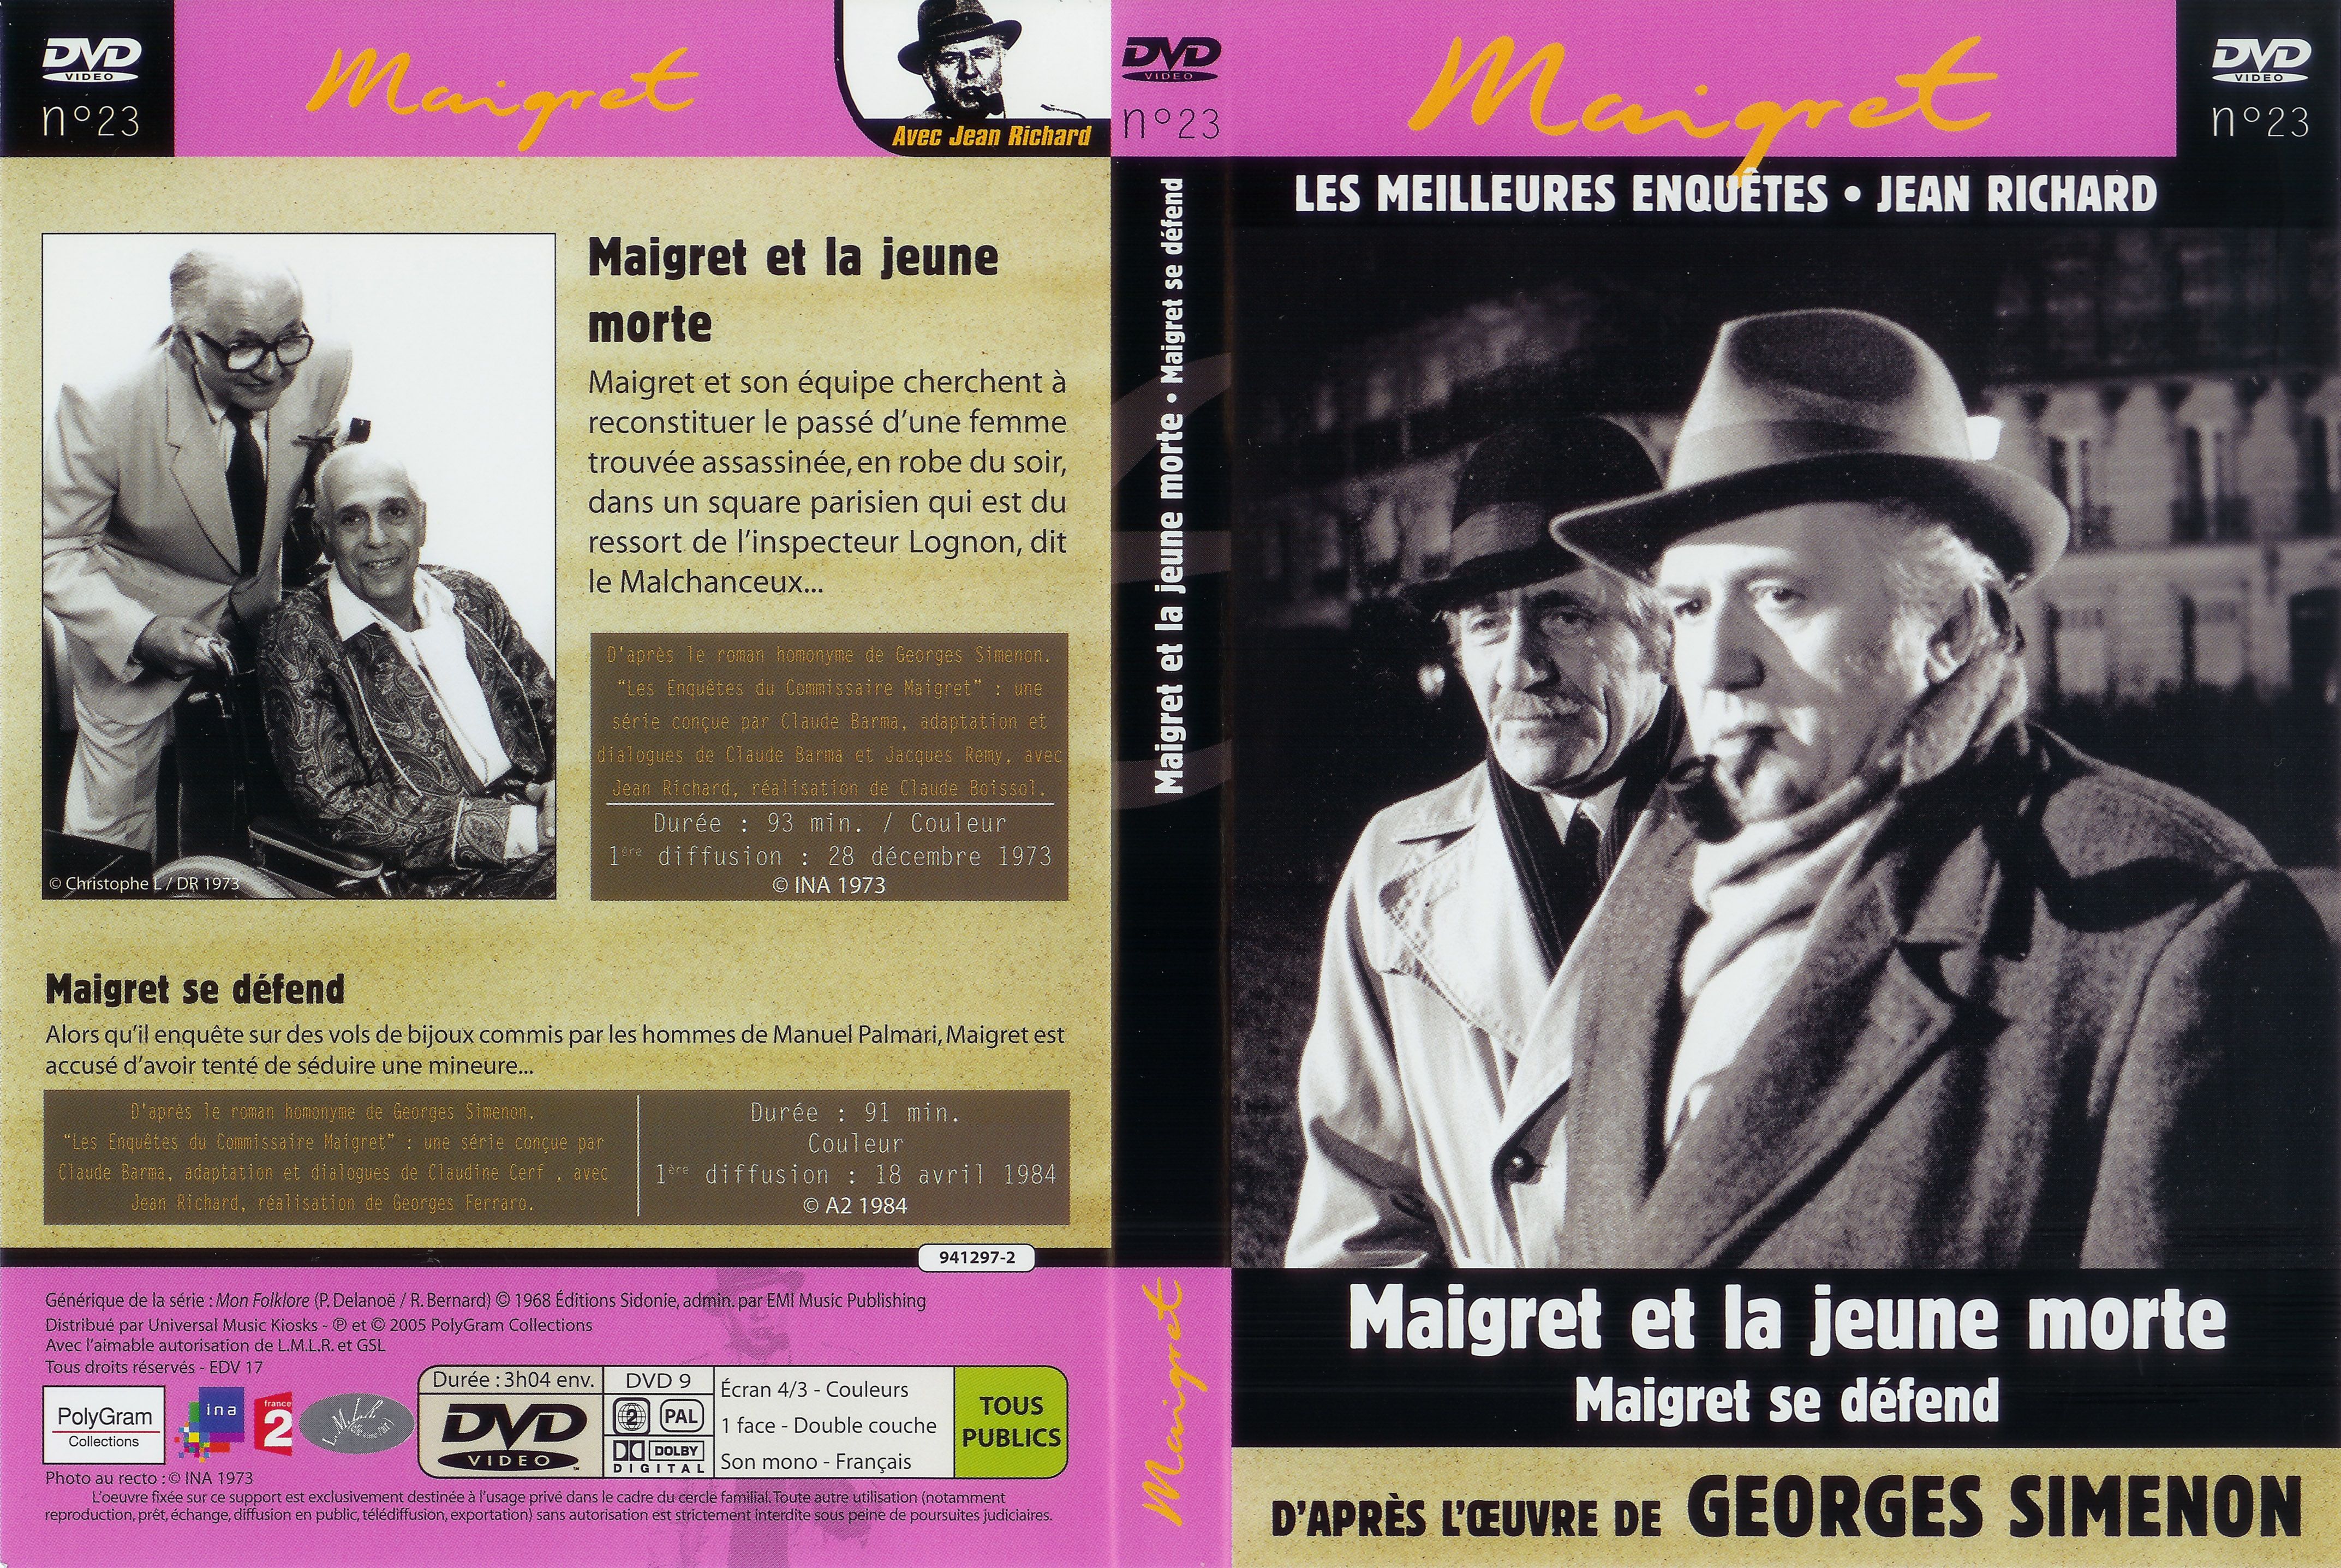 Jaquette DVD Maigret (Jean Richard) vol 23